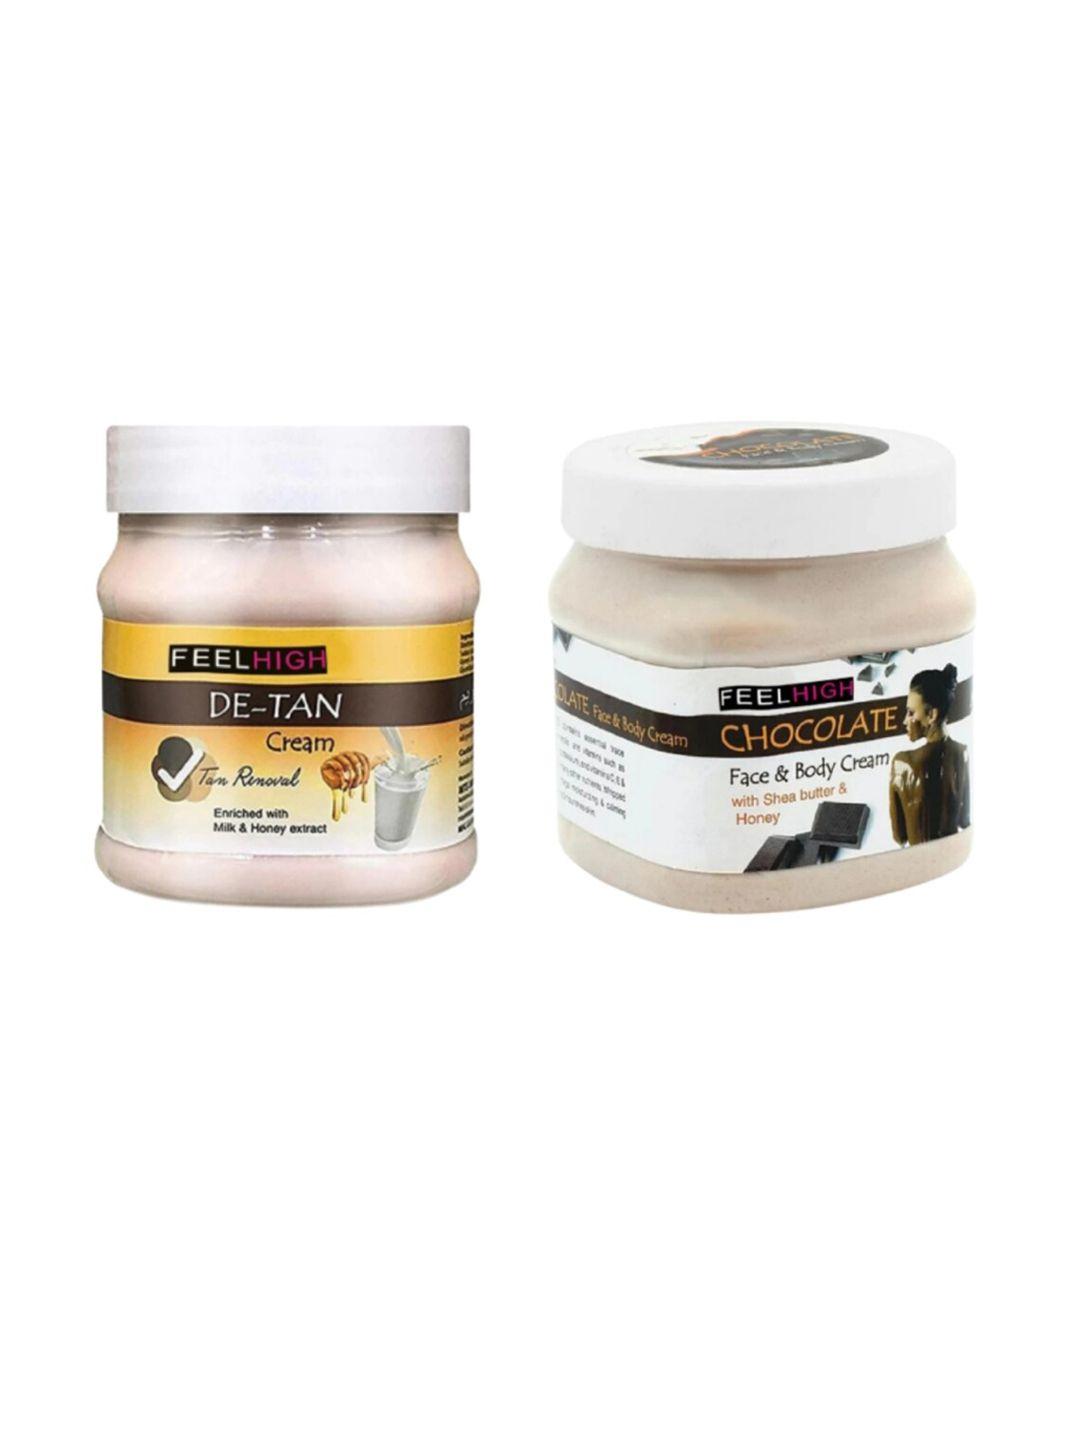 feelhigh set of 2 de-tan & chocolate cream face & body moisturizer - 500ml each